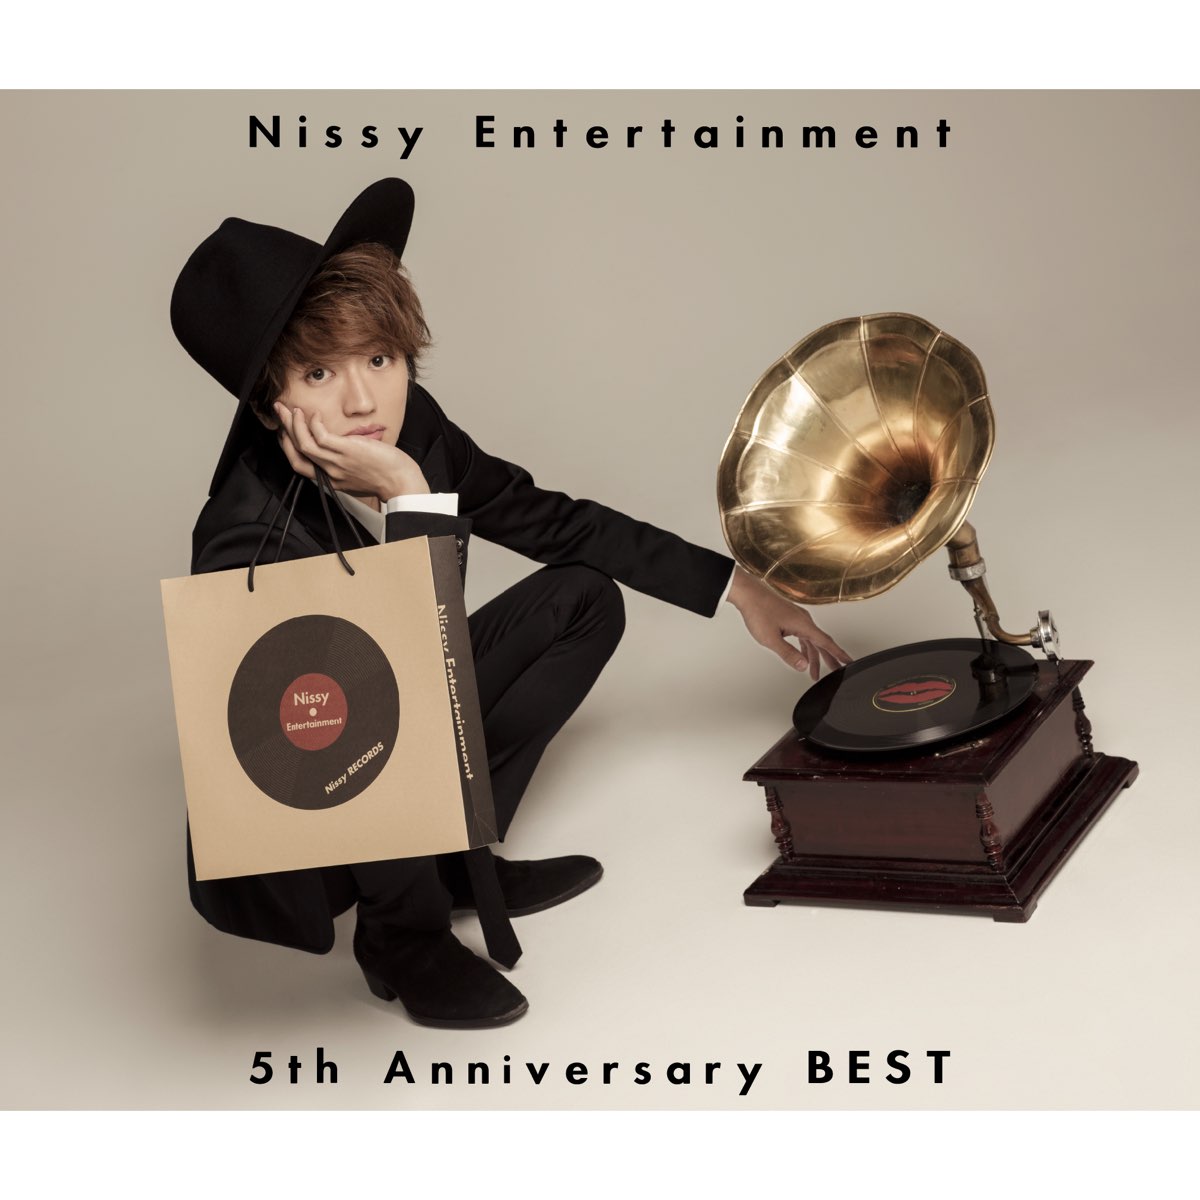 Nissy Entertainment 5th Anniversary BEST - Album by Nissy - Apple